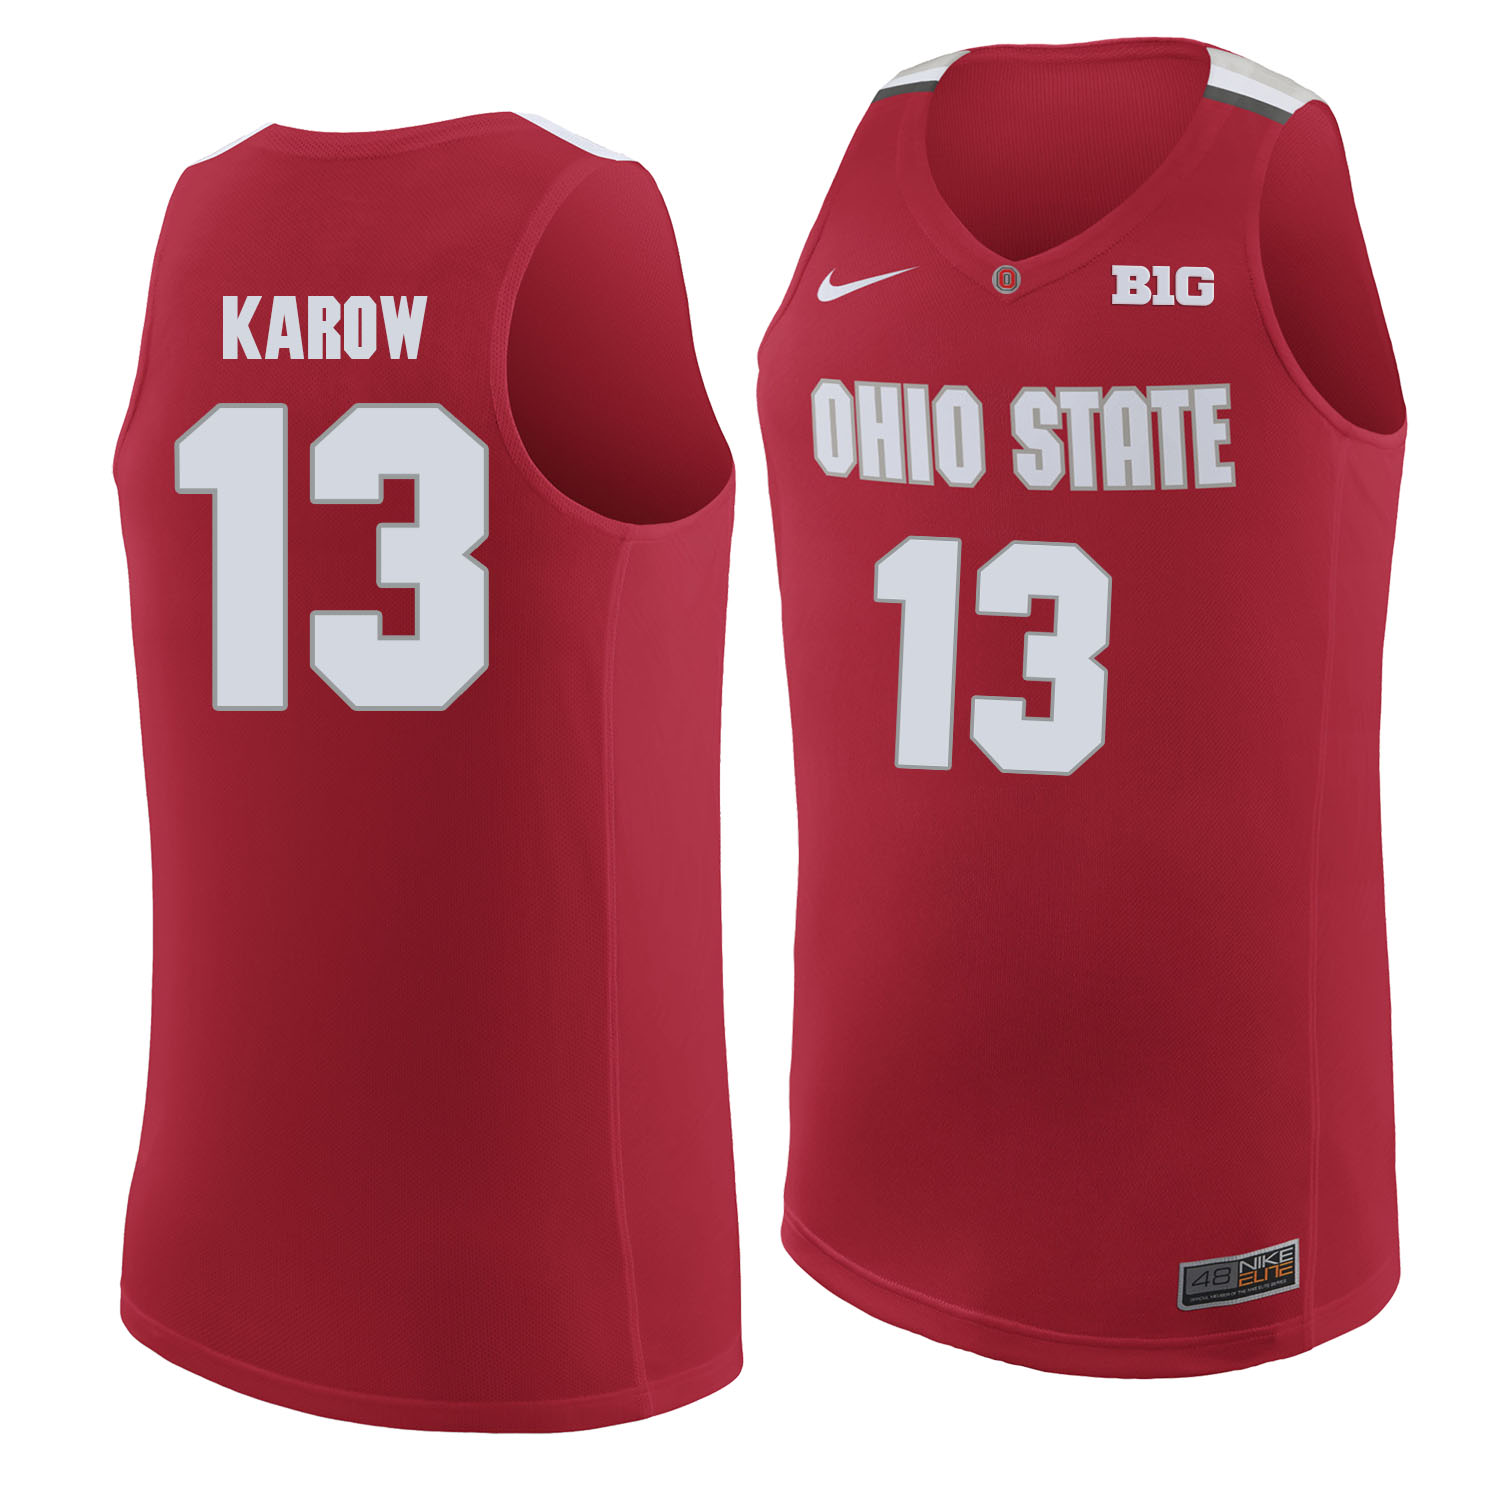 Ohio State Buckeyes 13 Marty Karow Red College Basketball Jersey